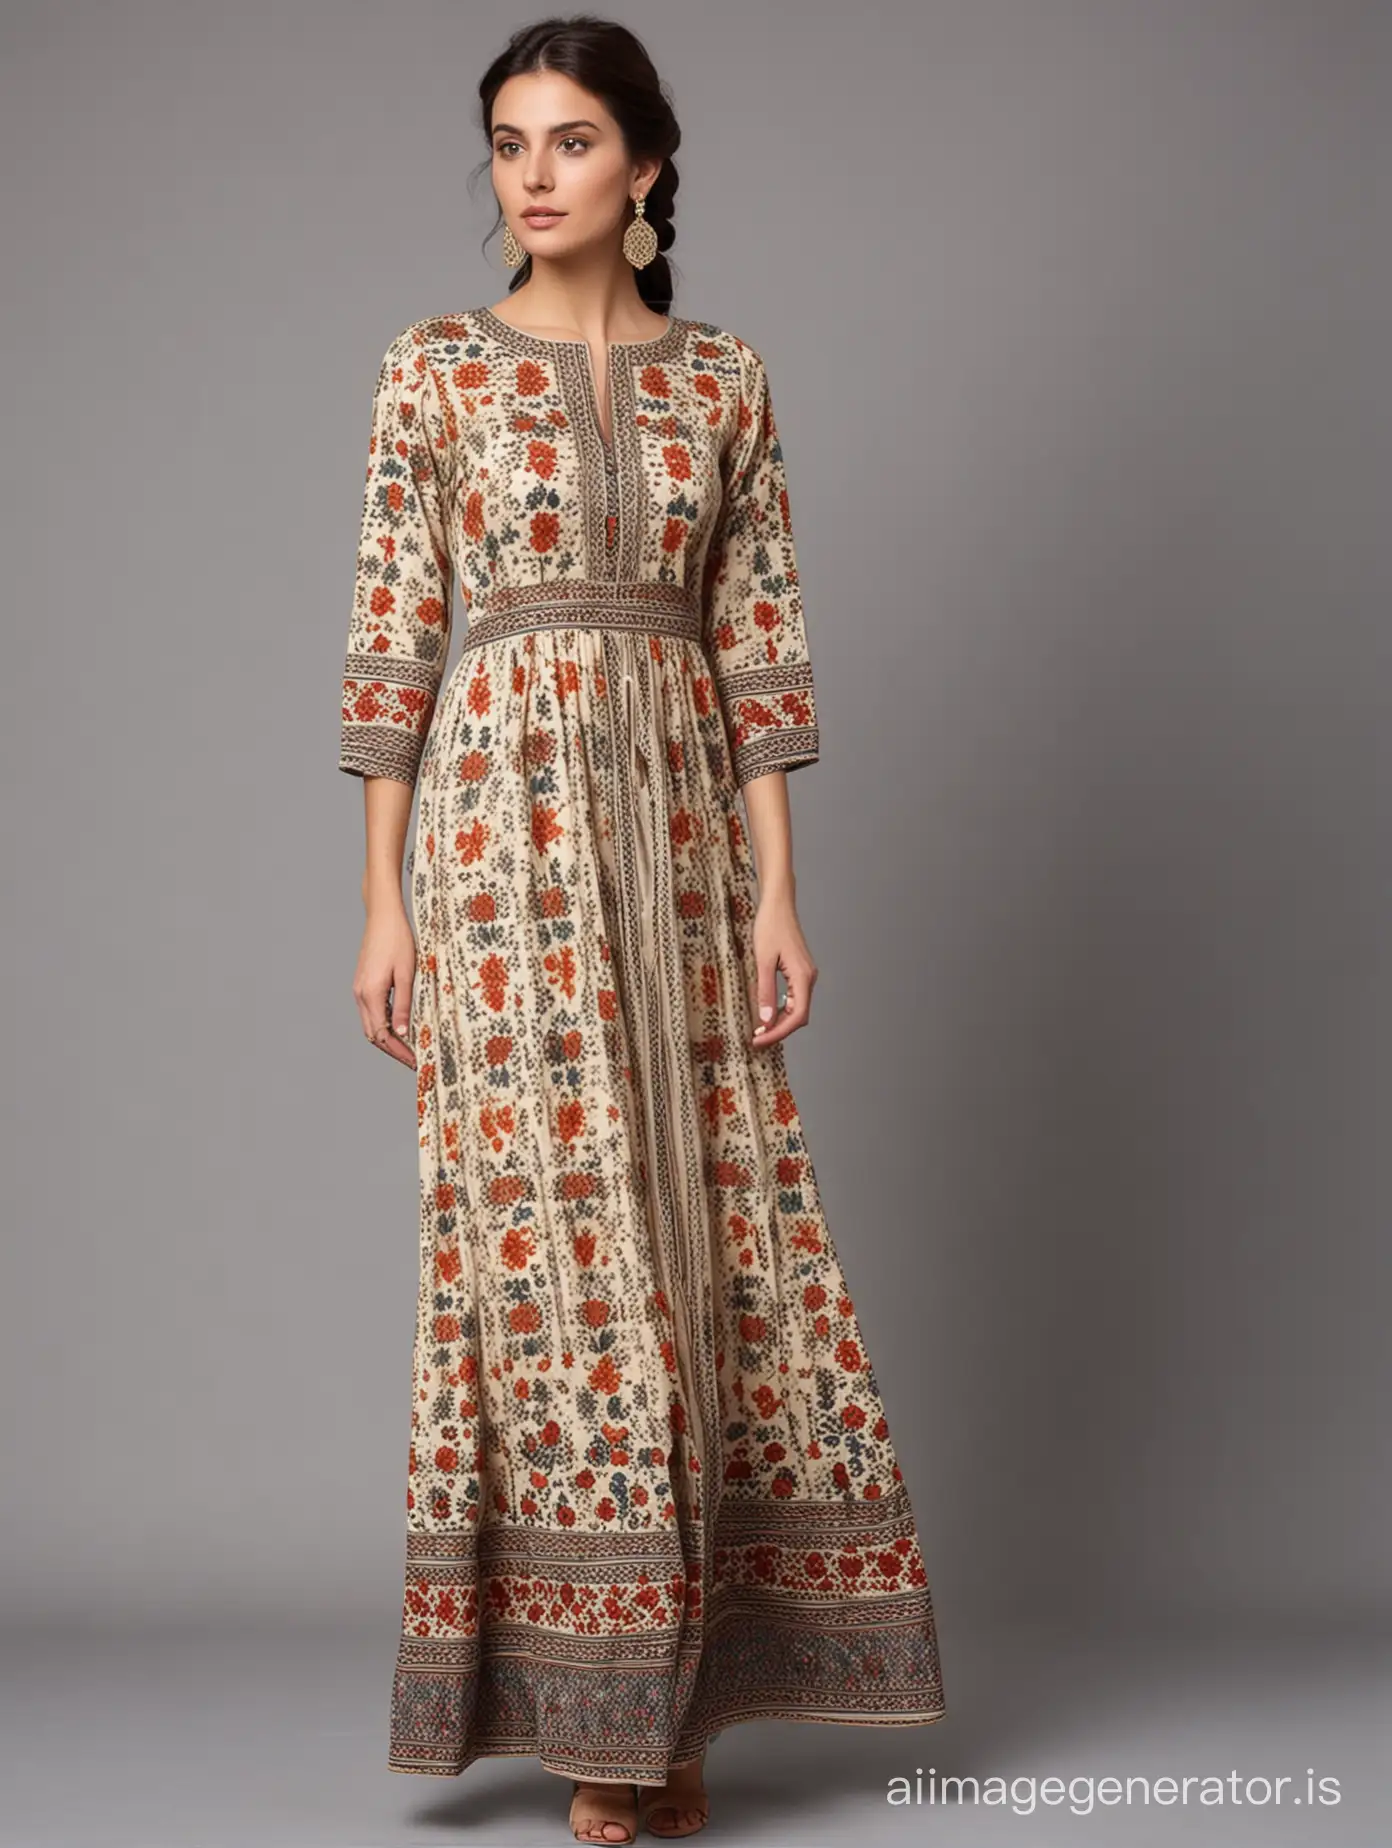 Elegant-Persian-Motif-Long-Dress-with-Cultural-Significance